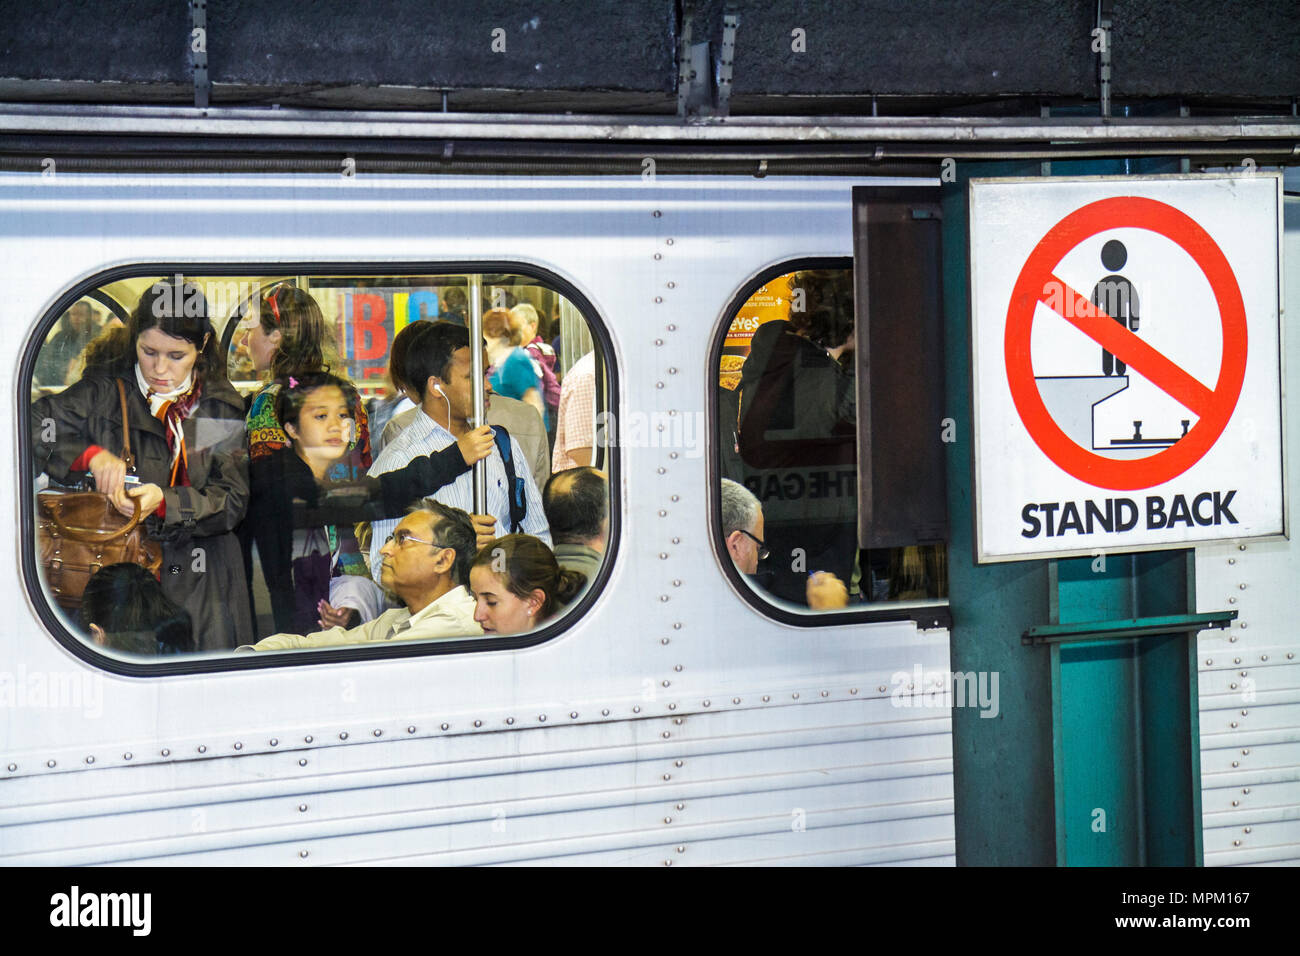 Toronto Canada,TTC subway,Bloor Yonge Station,Yonge Yellow Line,passenger passengers rider riders,commuter,commuters,crowded train,window,Asian woman Stock Photo